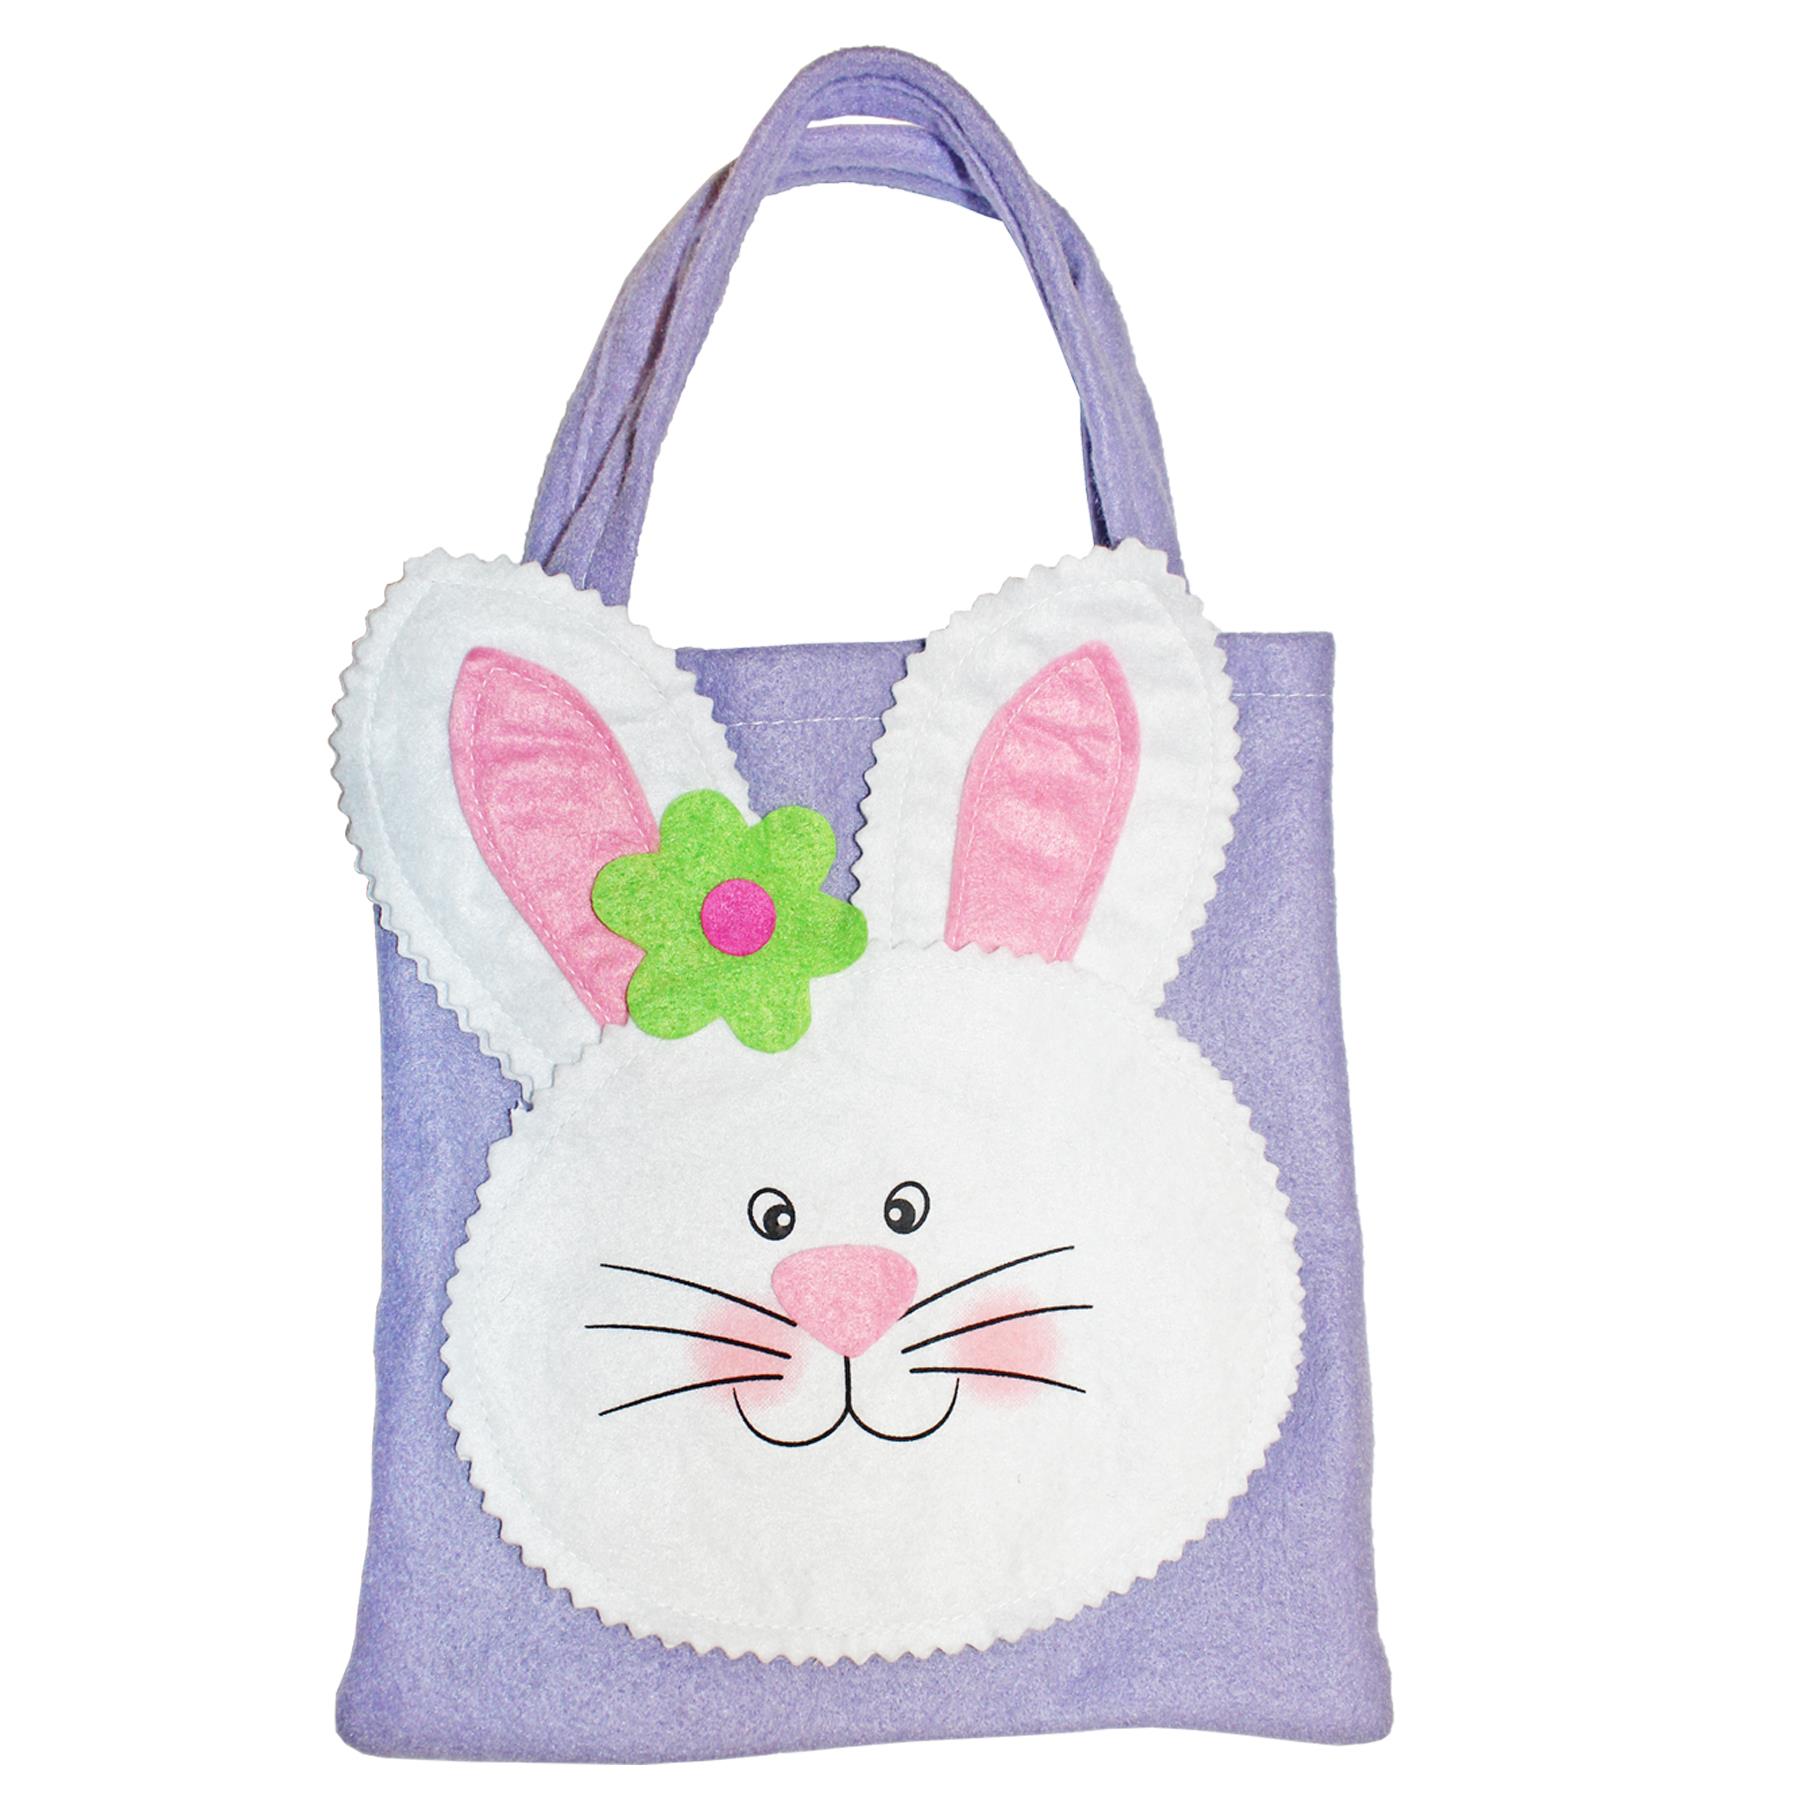 Easter Baskets, Buckets, Accessories - Bunny Felt Bag Purple